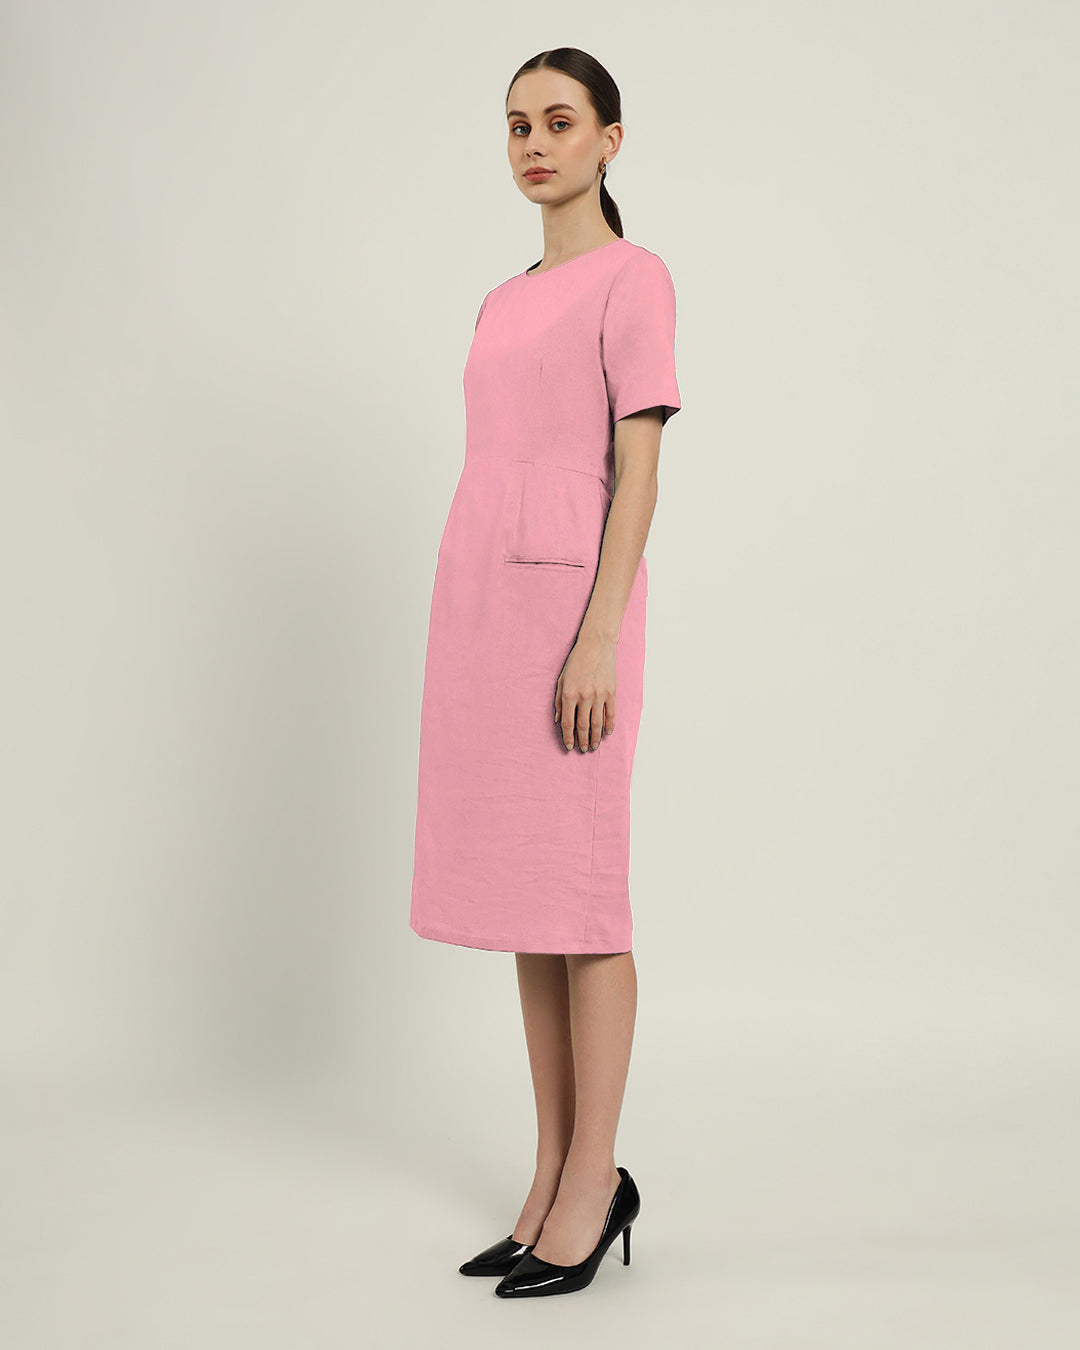 The Cairo Fondant Pink Cotton Dress